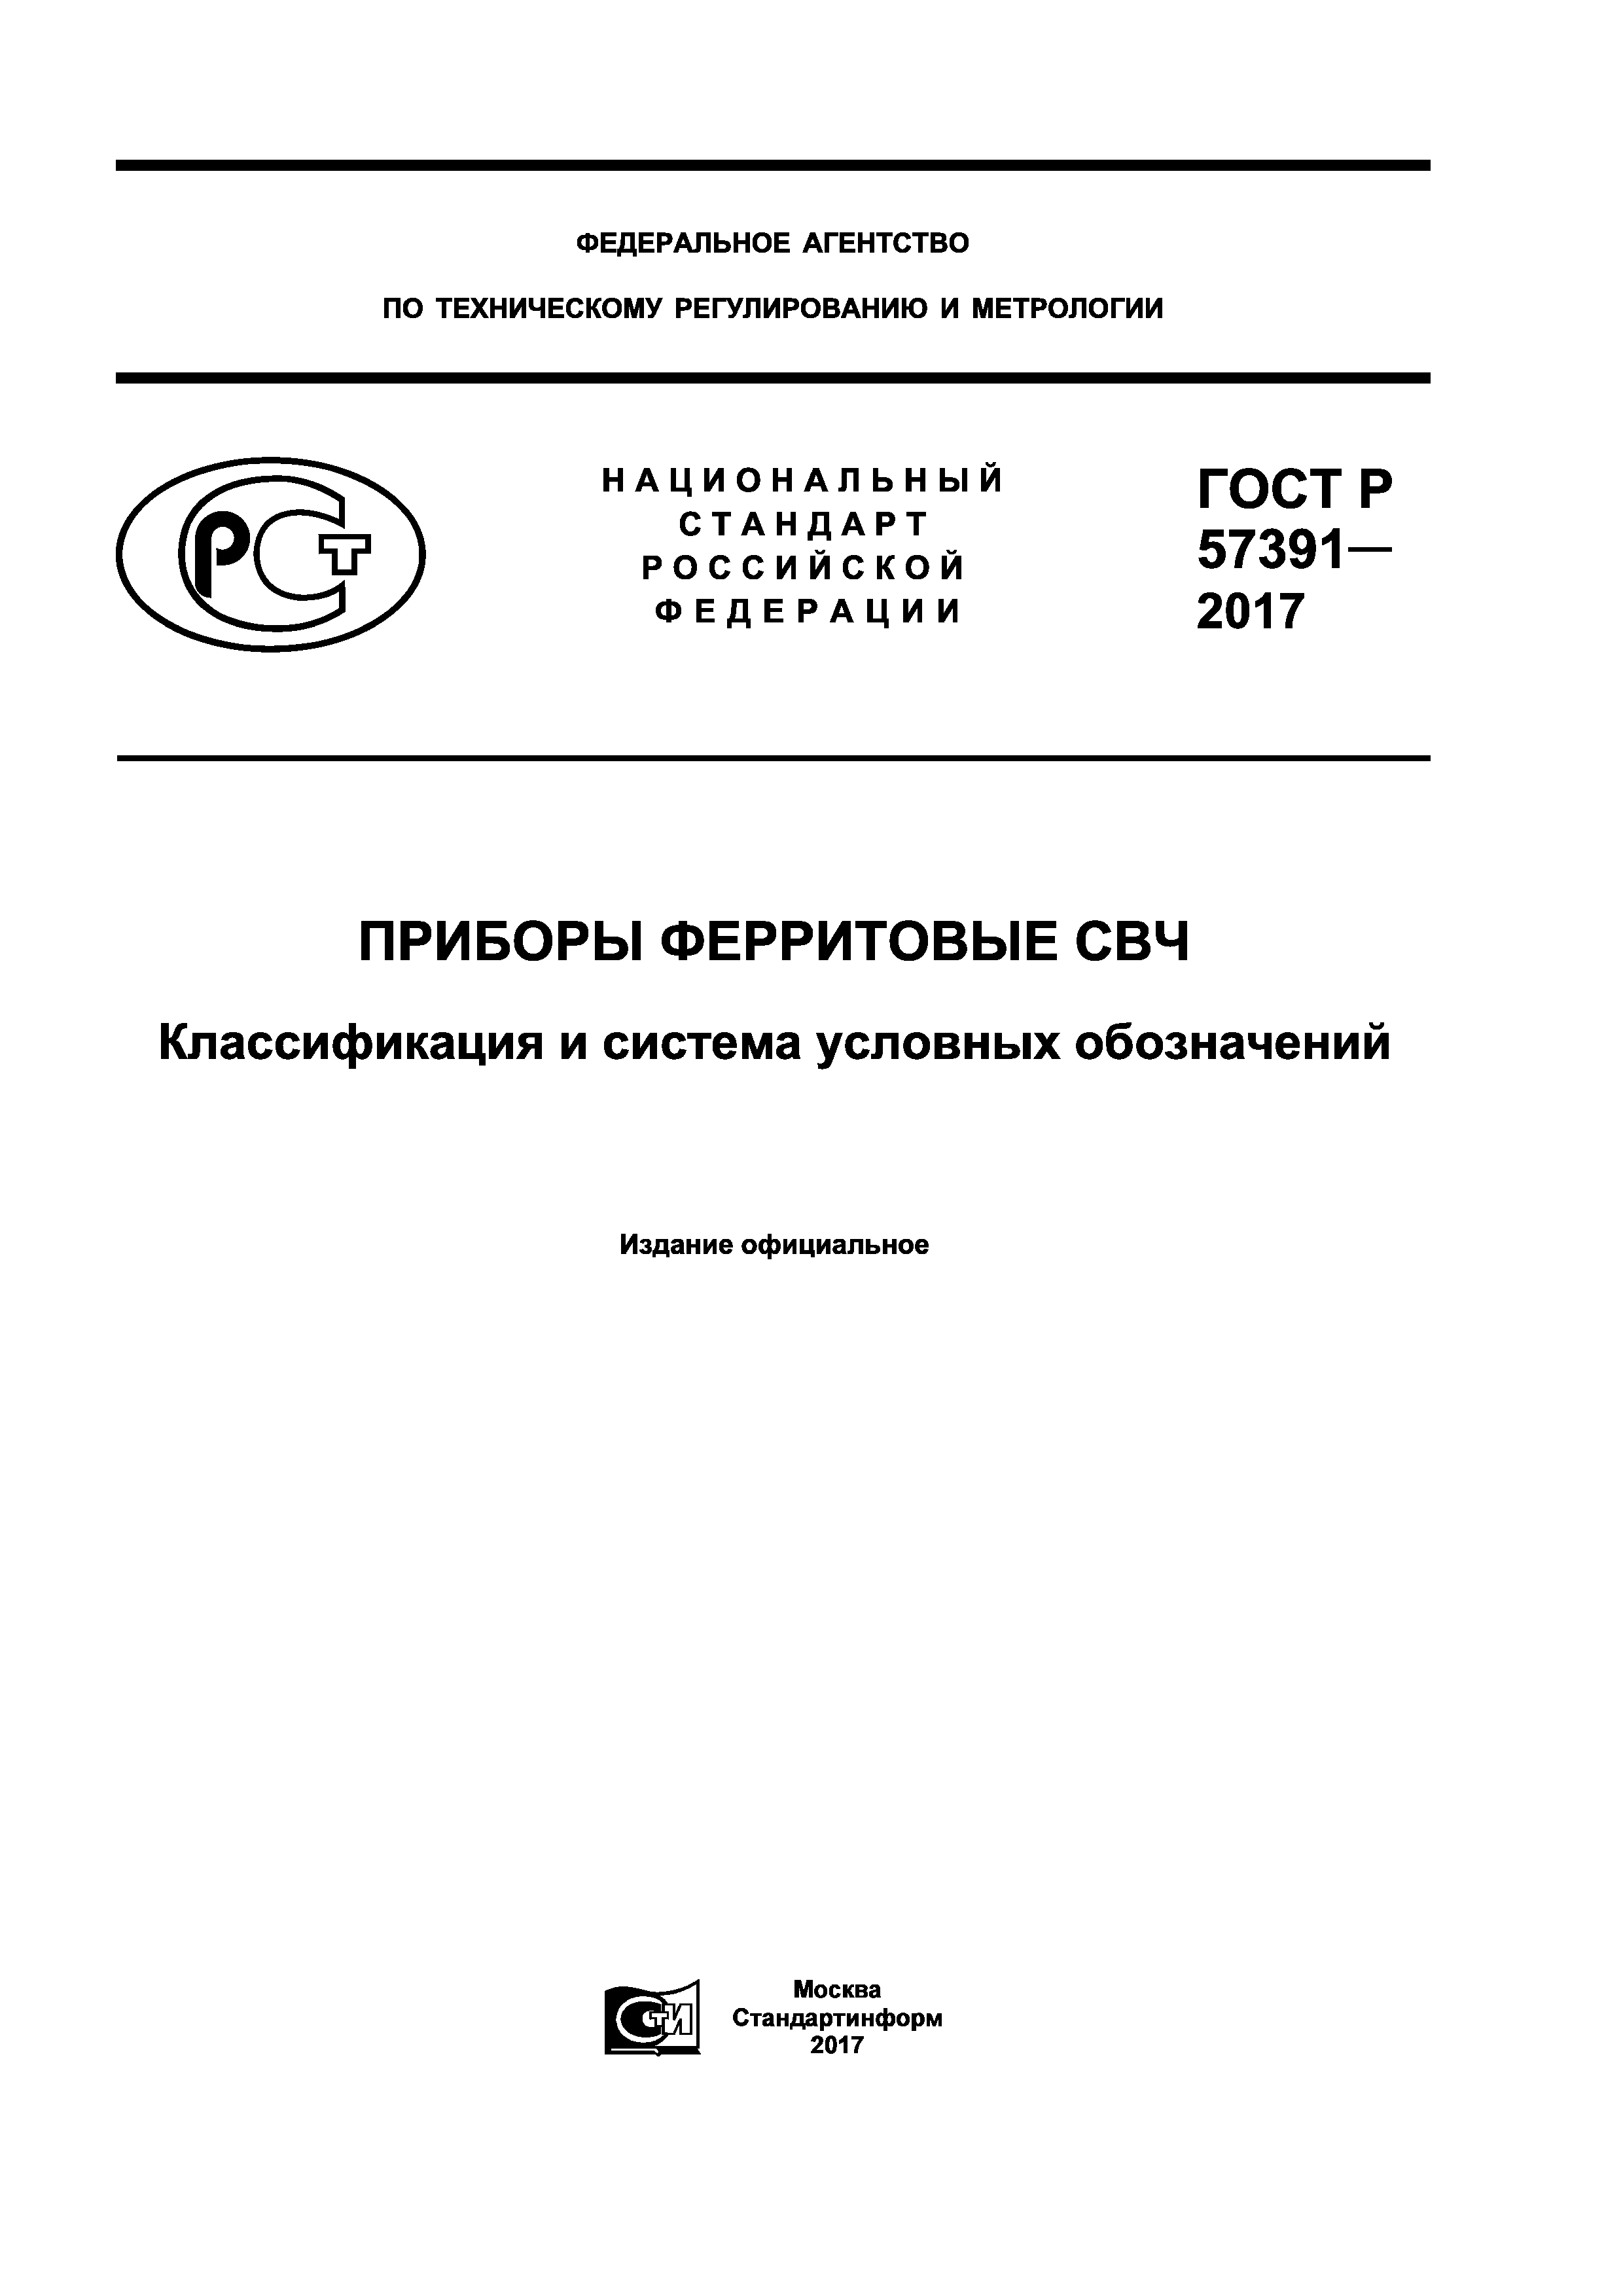 ГОСТ Р 57391-2017